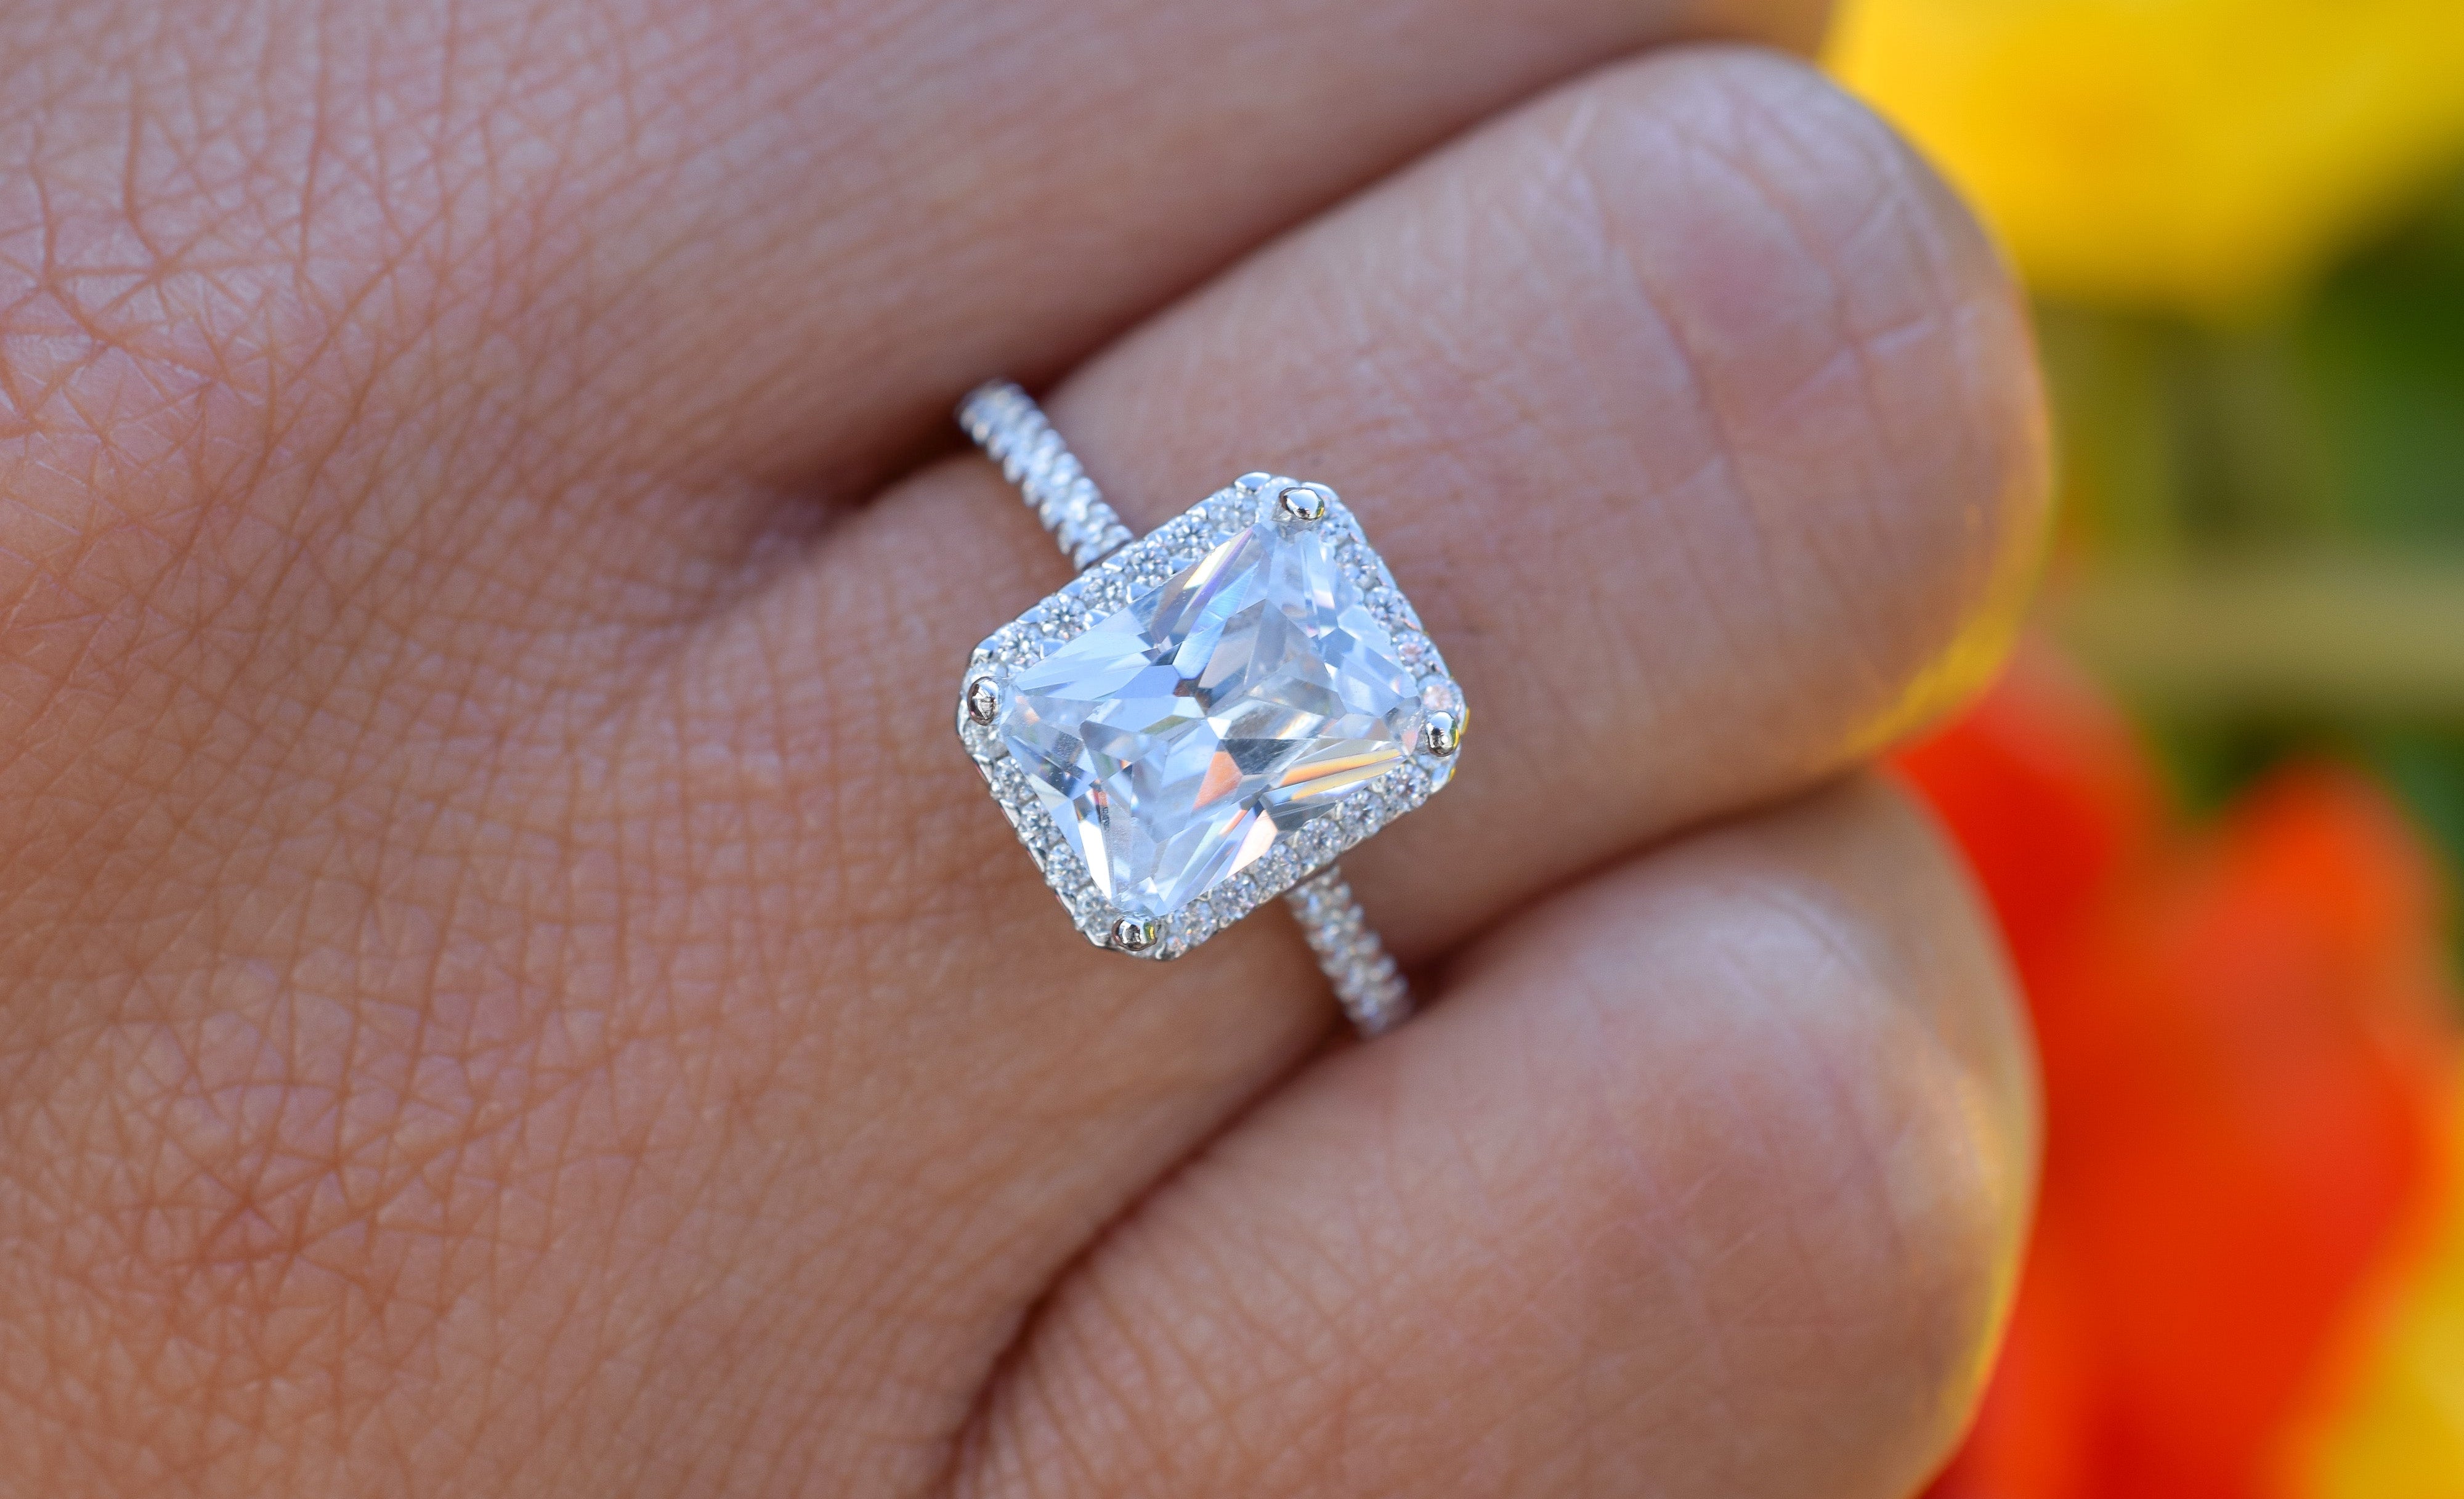 Vierkante ring zilver, zilveren vierkante ring, gouden vierkante ring, verlovingsring zilver, prinses ring zilver, ring met stenen, vierkante prinses ring